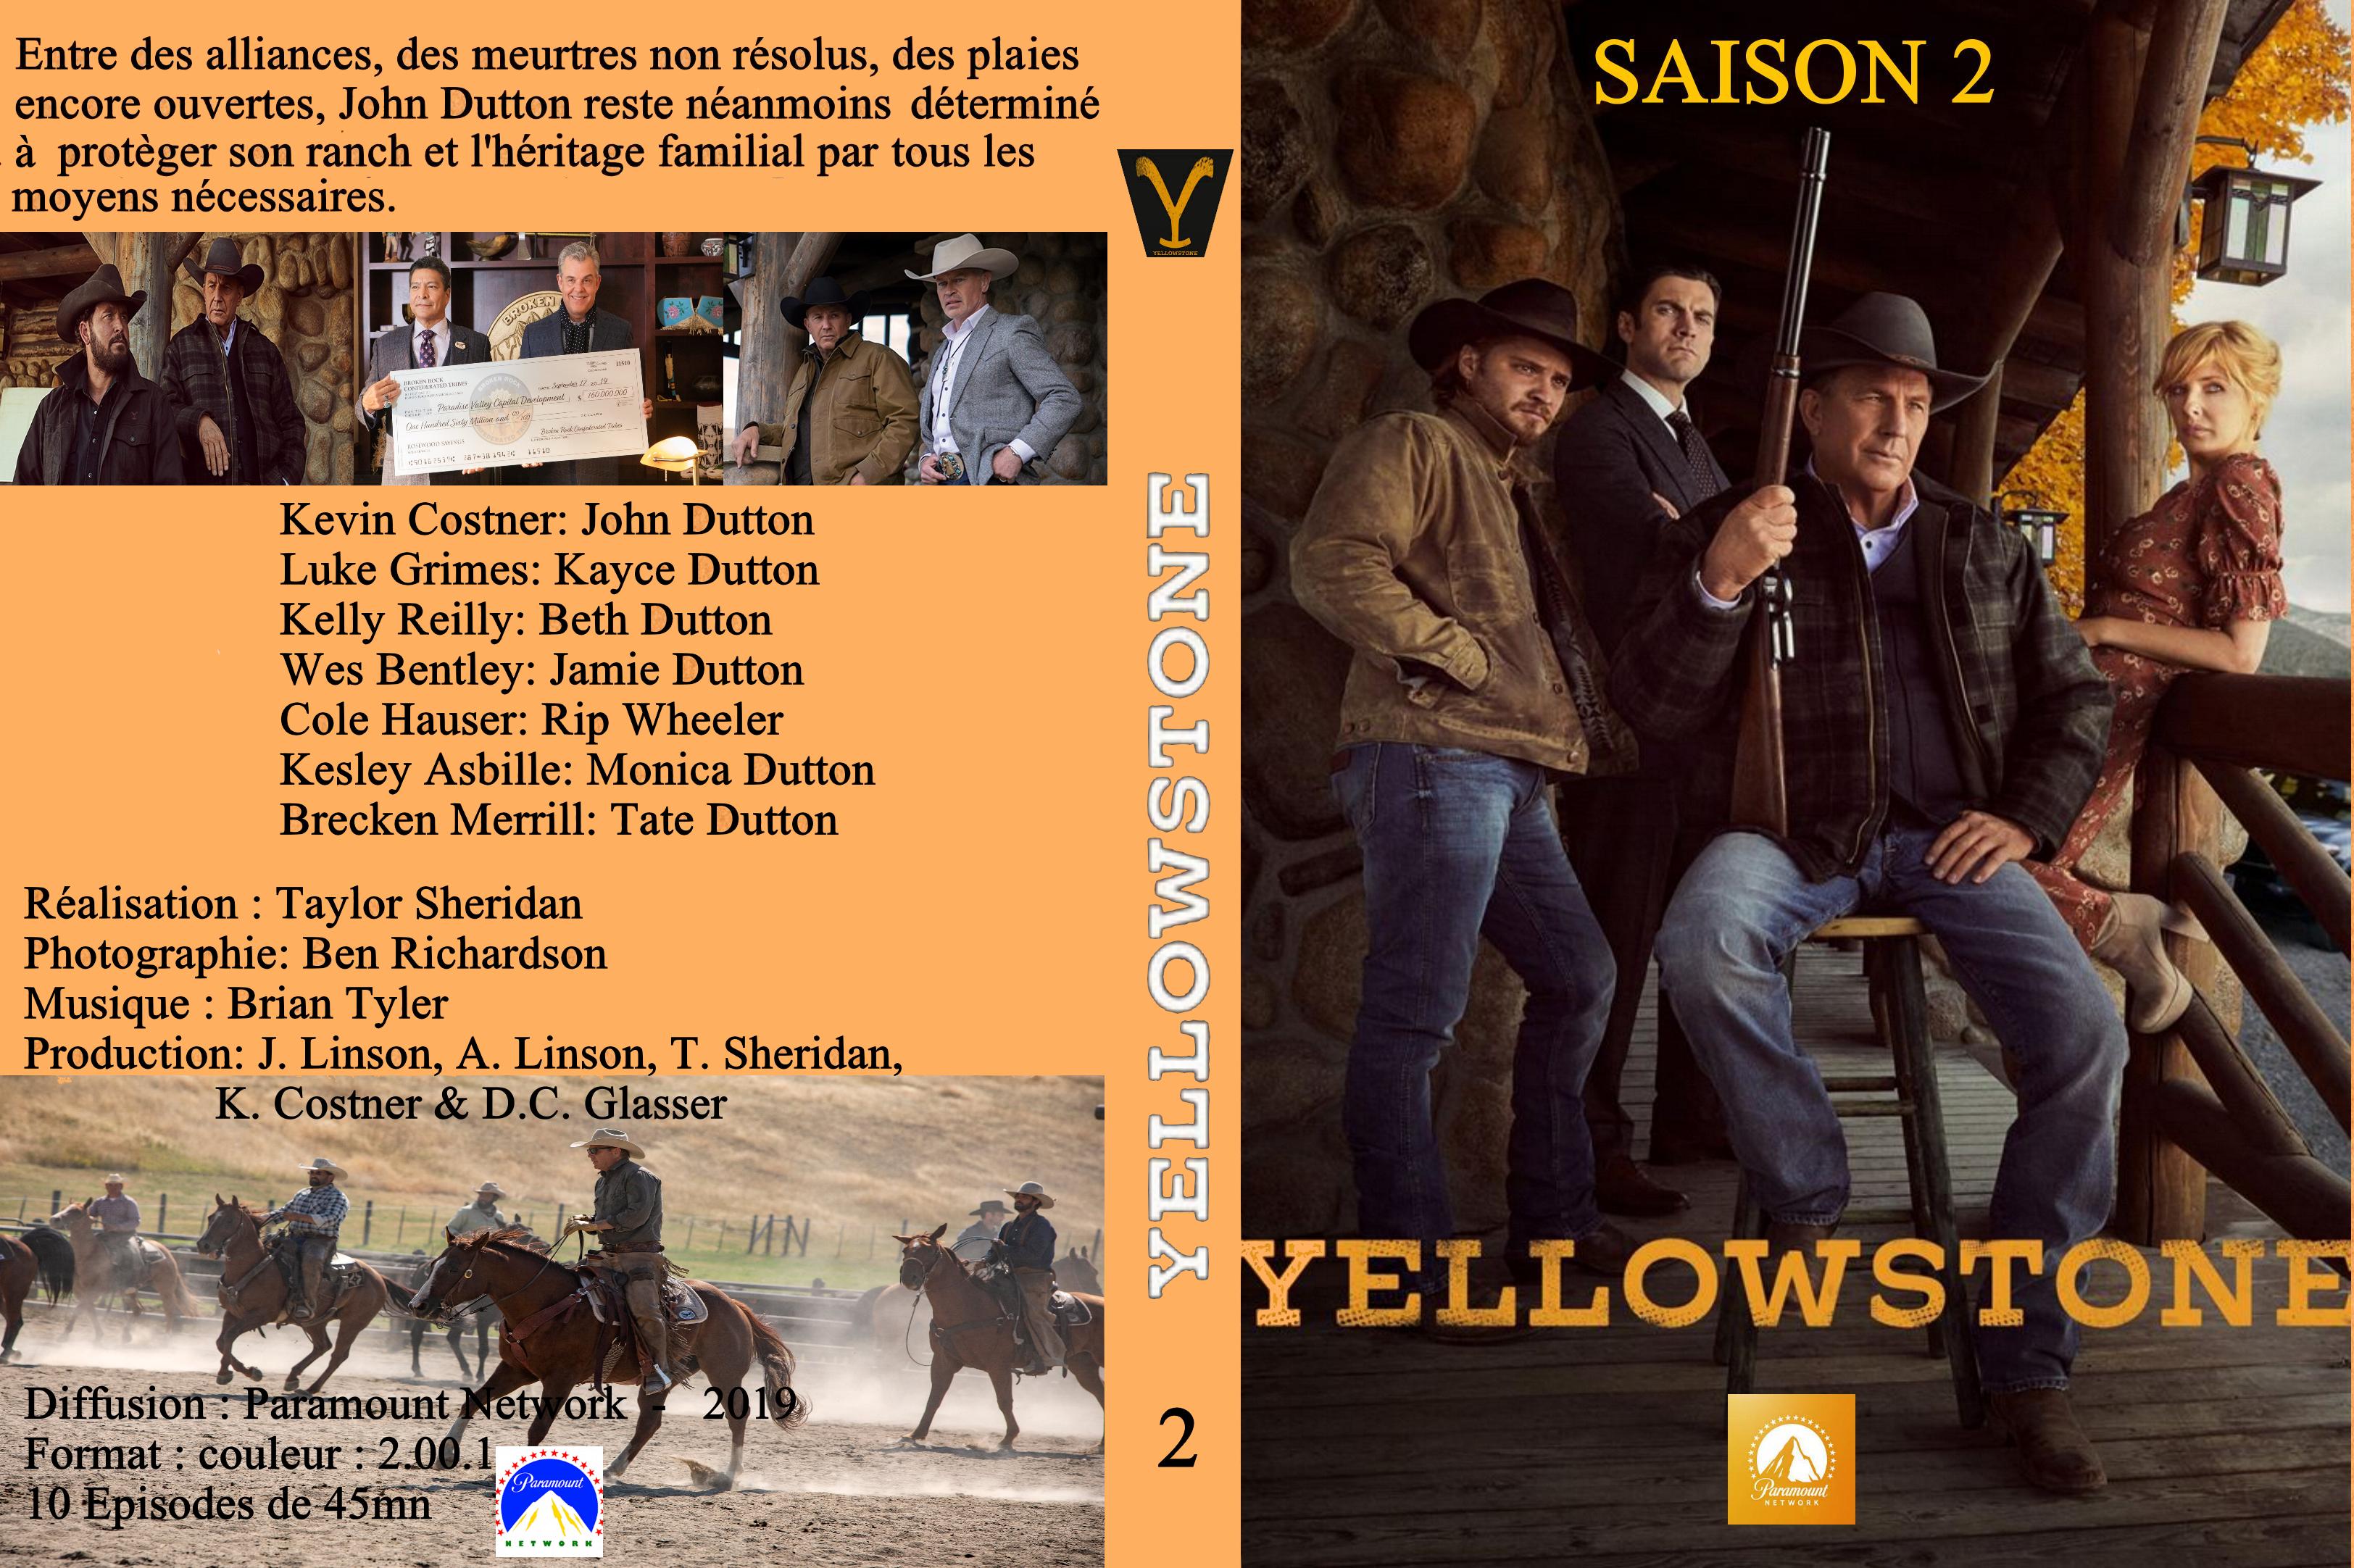 Jaquette DVD Yellowstone Saison 2 custom